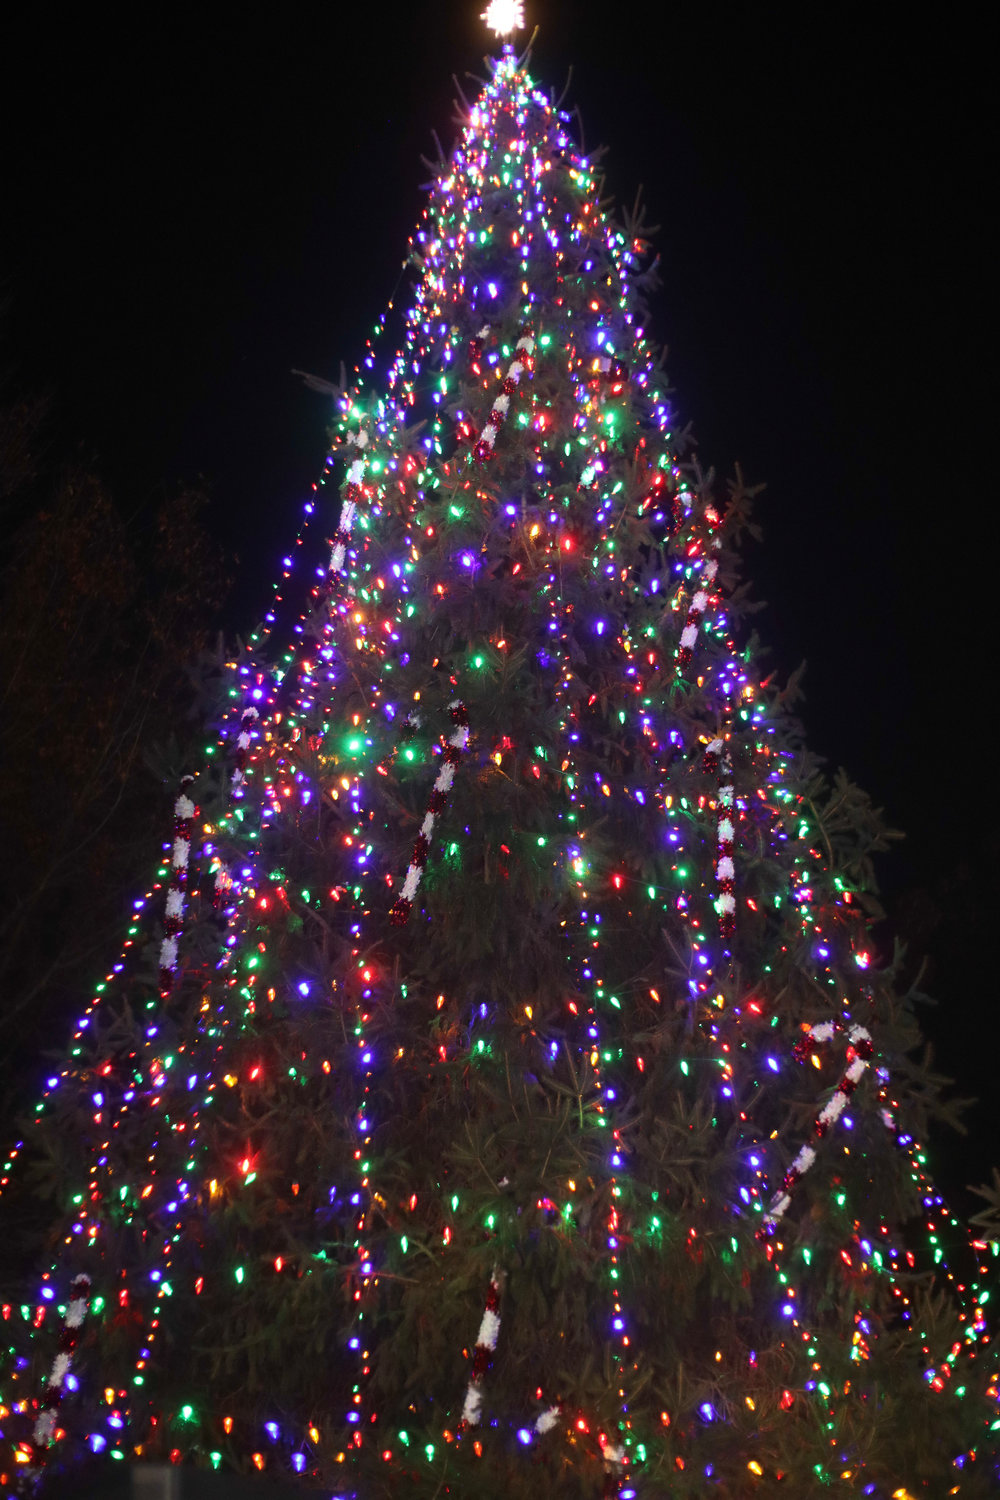 The Christmas tree lit up at Arthur J. Hendrickson Park kicking off the village’s annual Winterfest ccelebration.